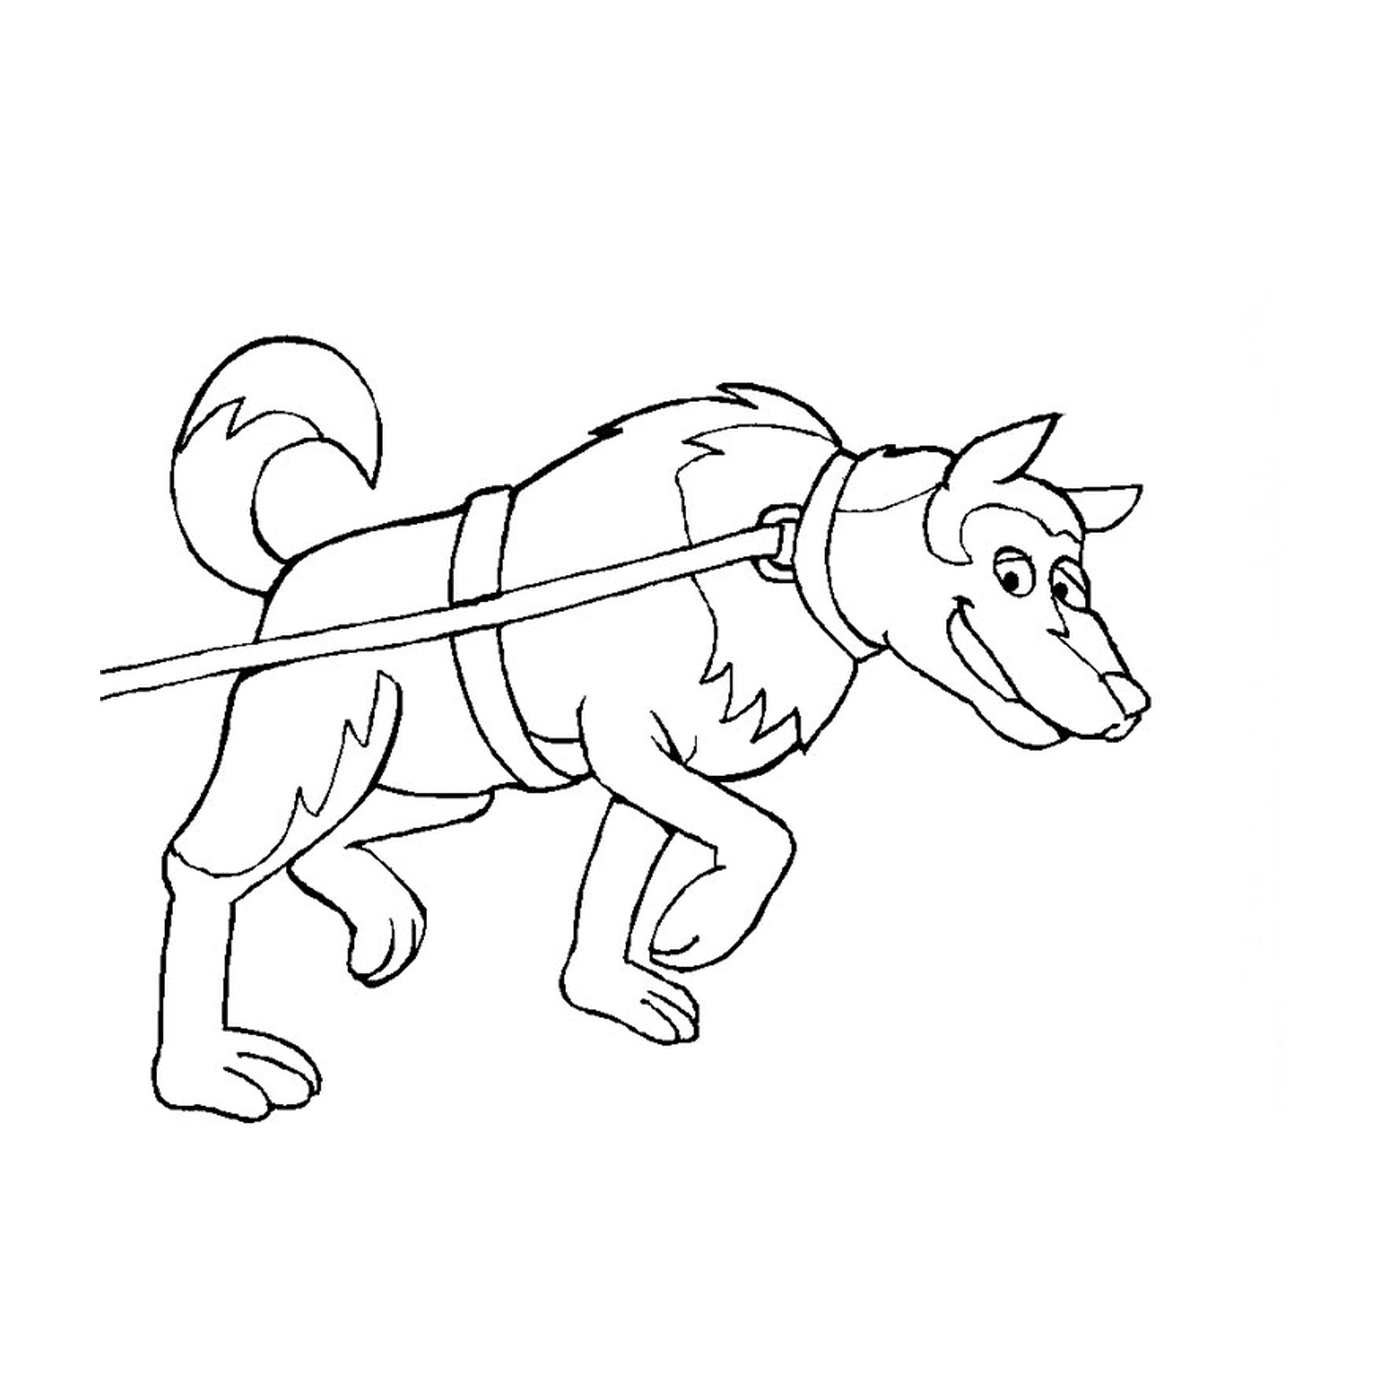  Un perro trineo con correa 